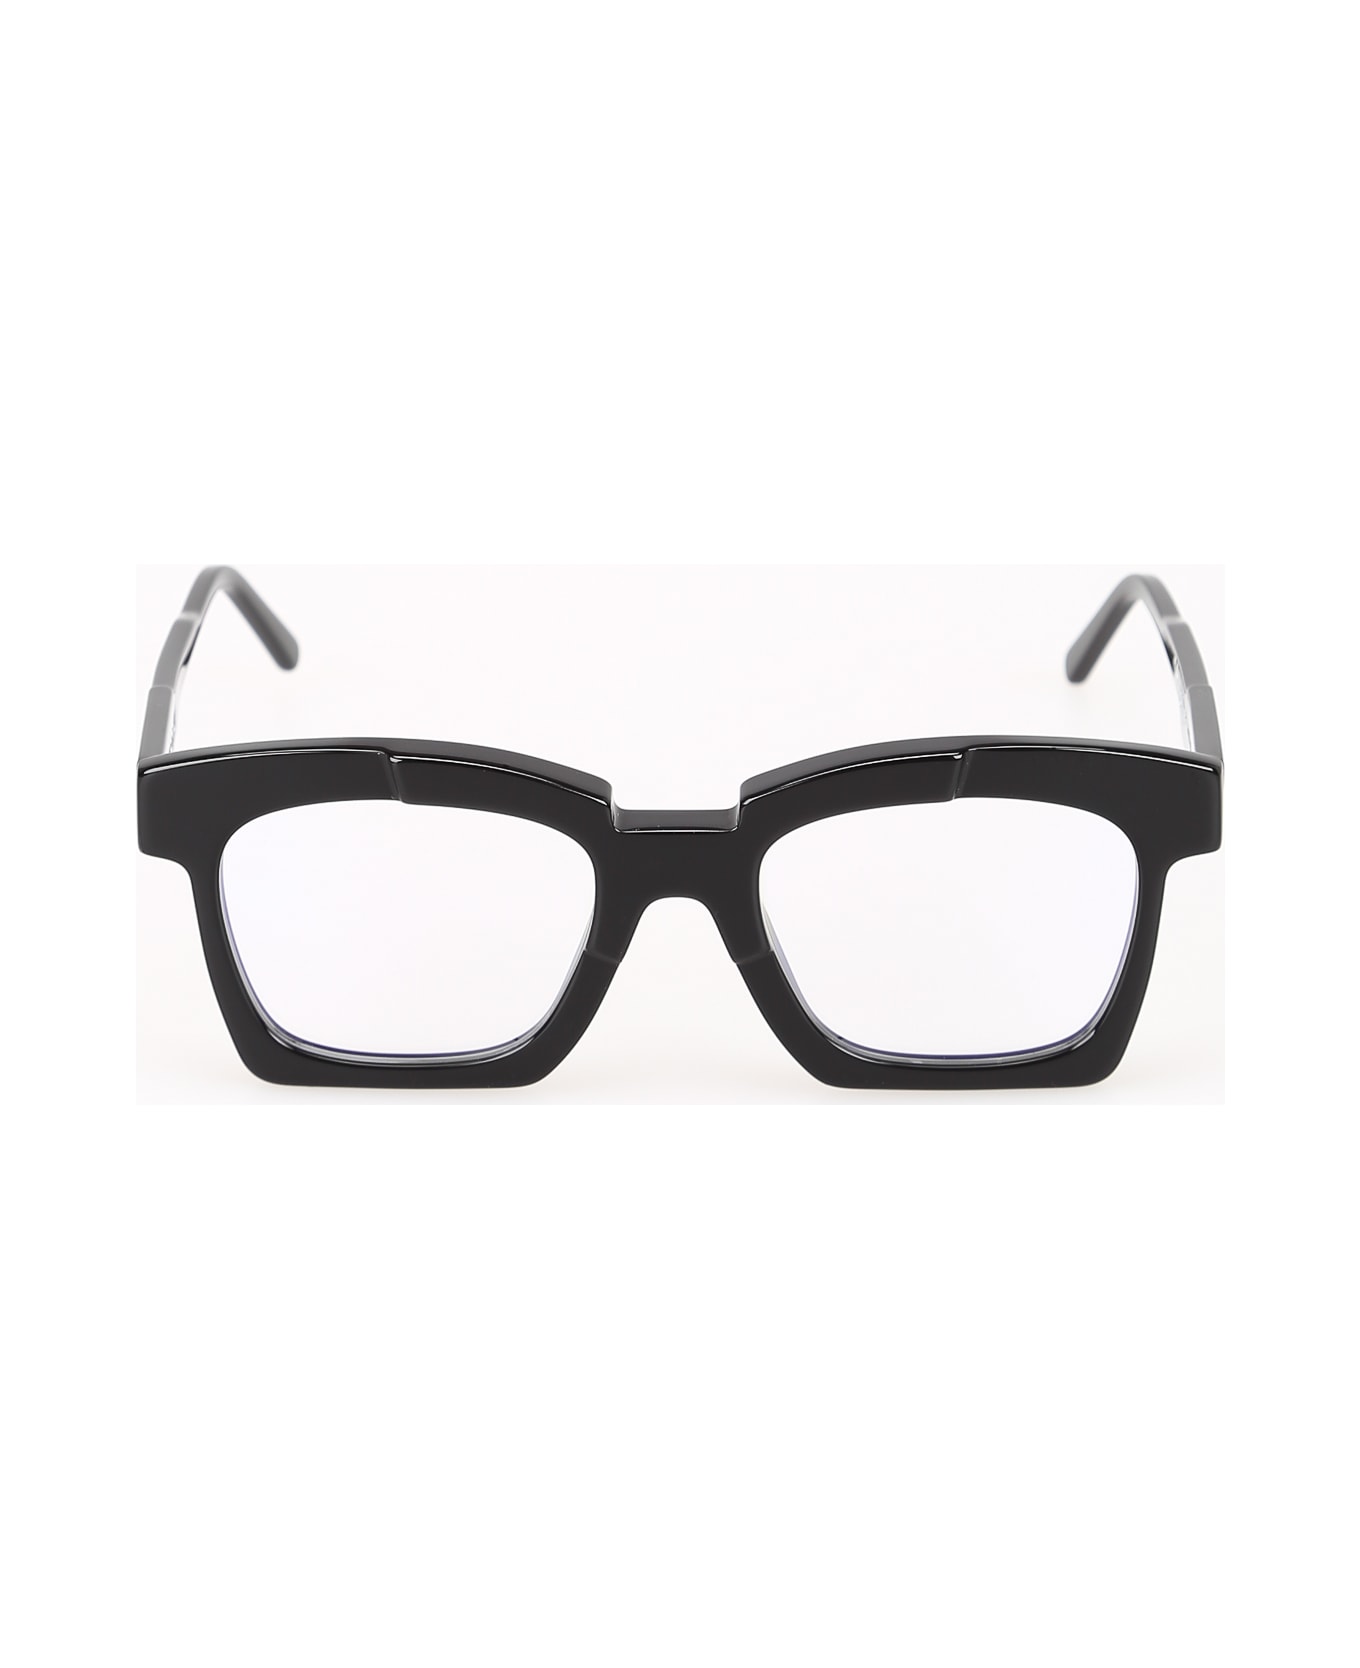 Kuboraum K5 Eyewear - Bs